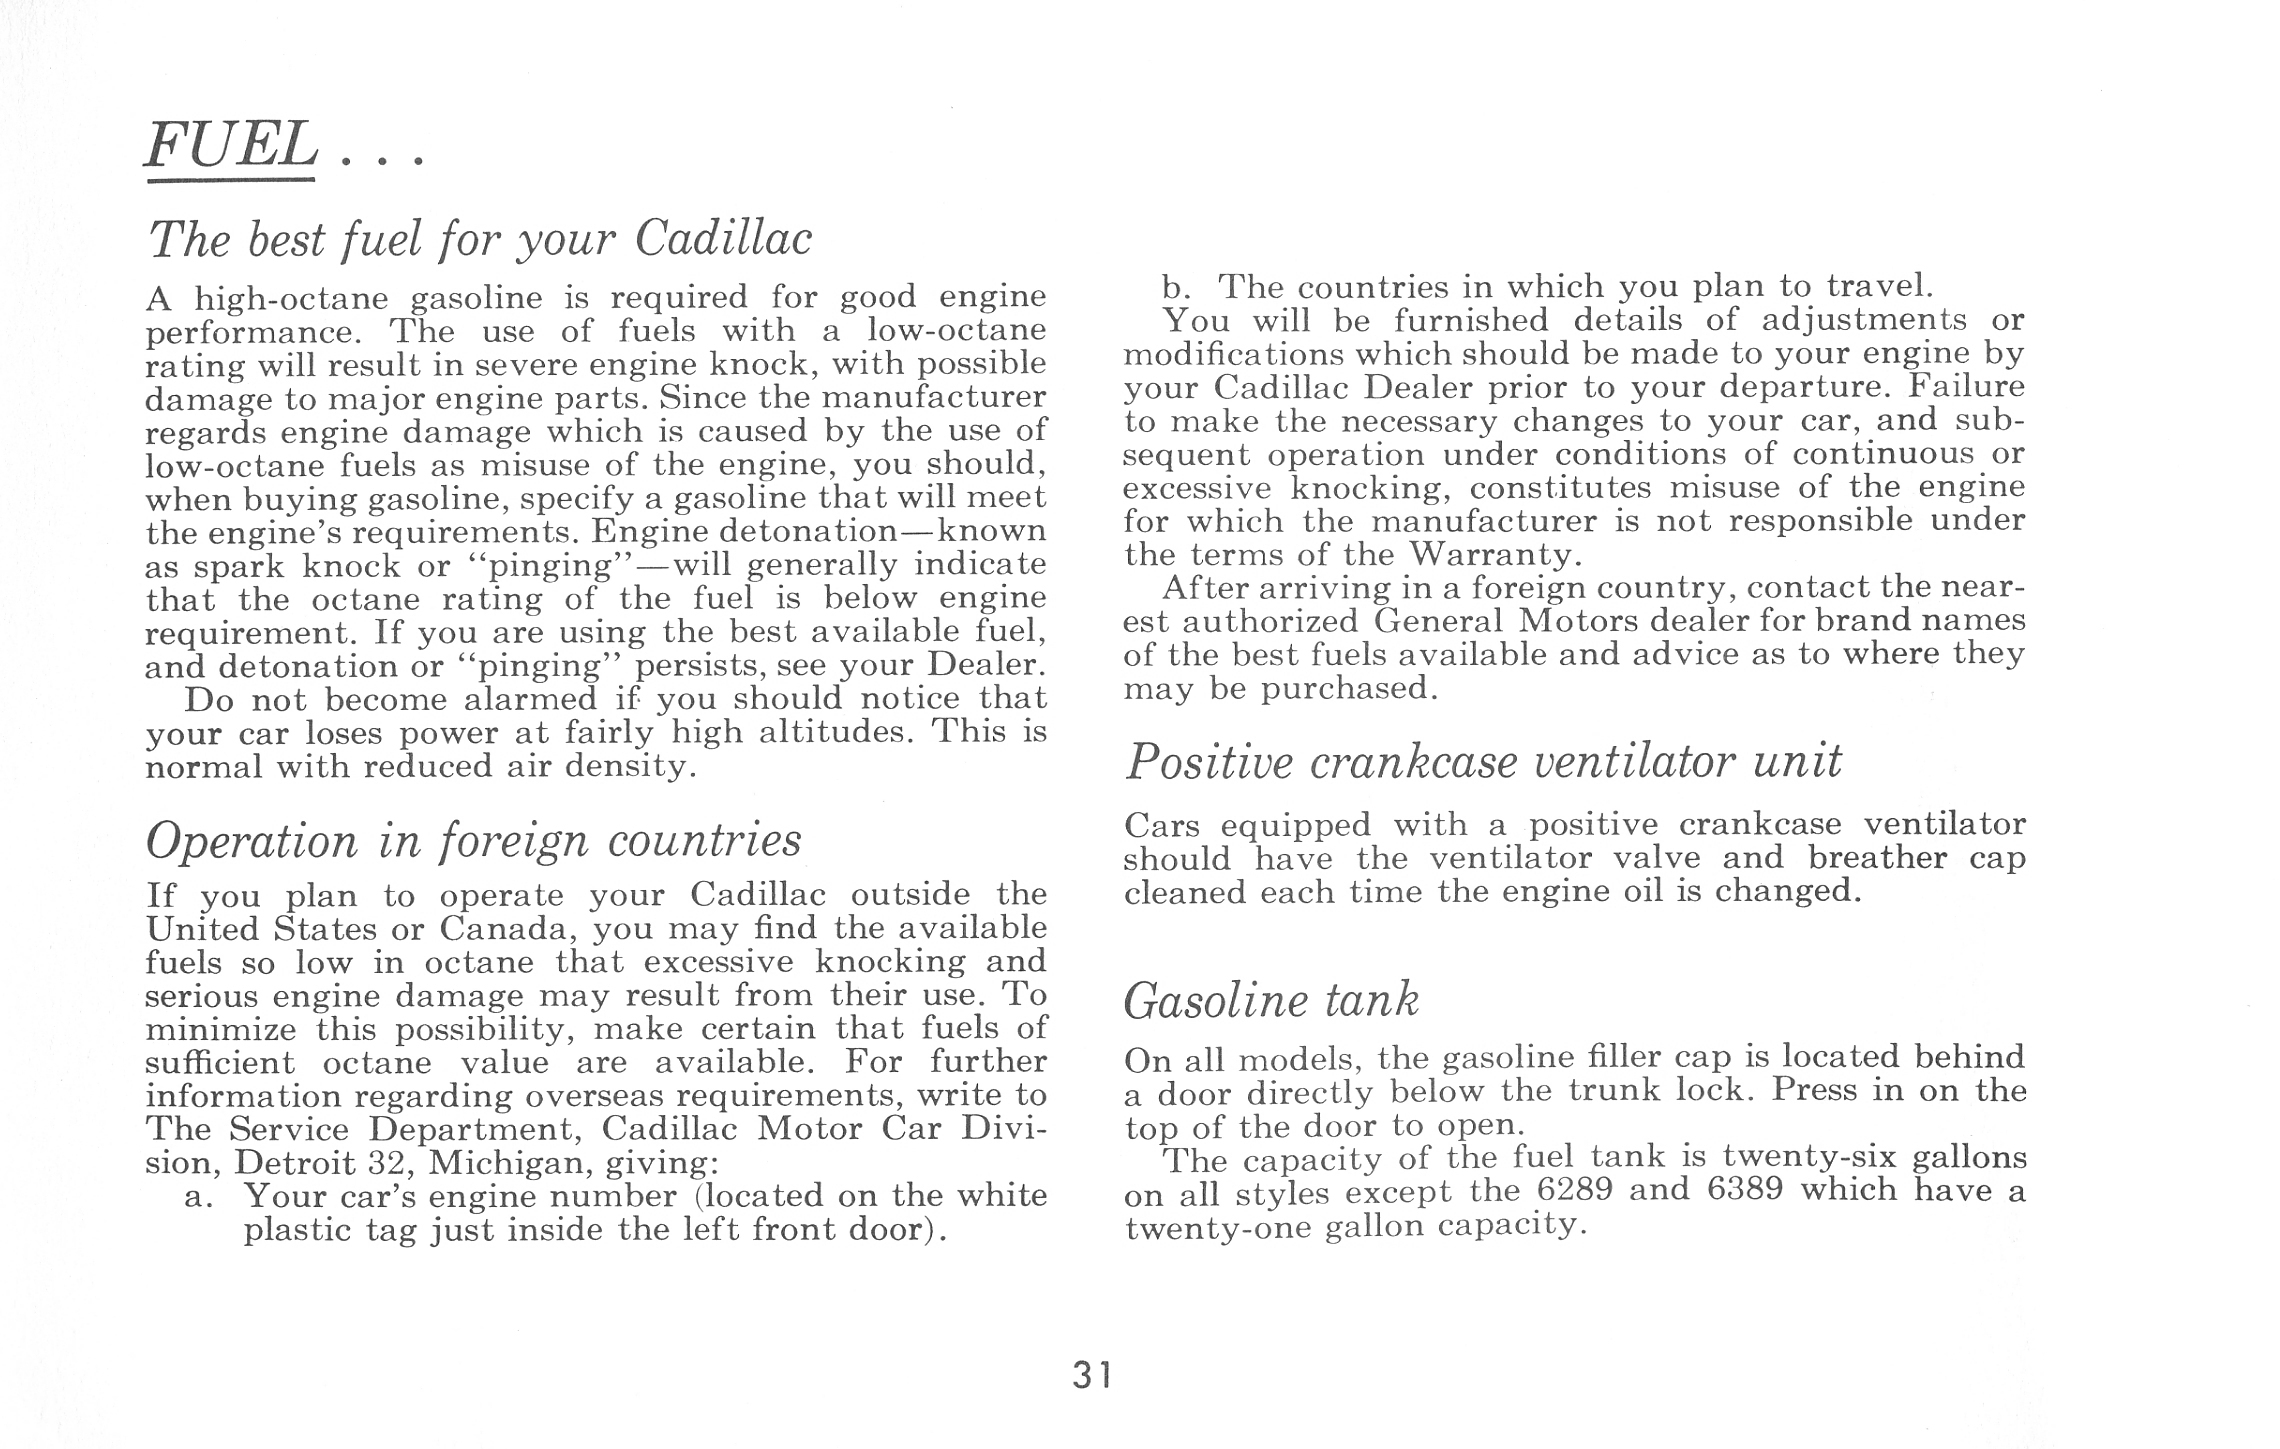 n_1962 Cadillac Owner's Manual-Page 31.jpg